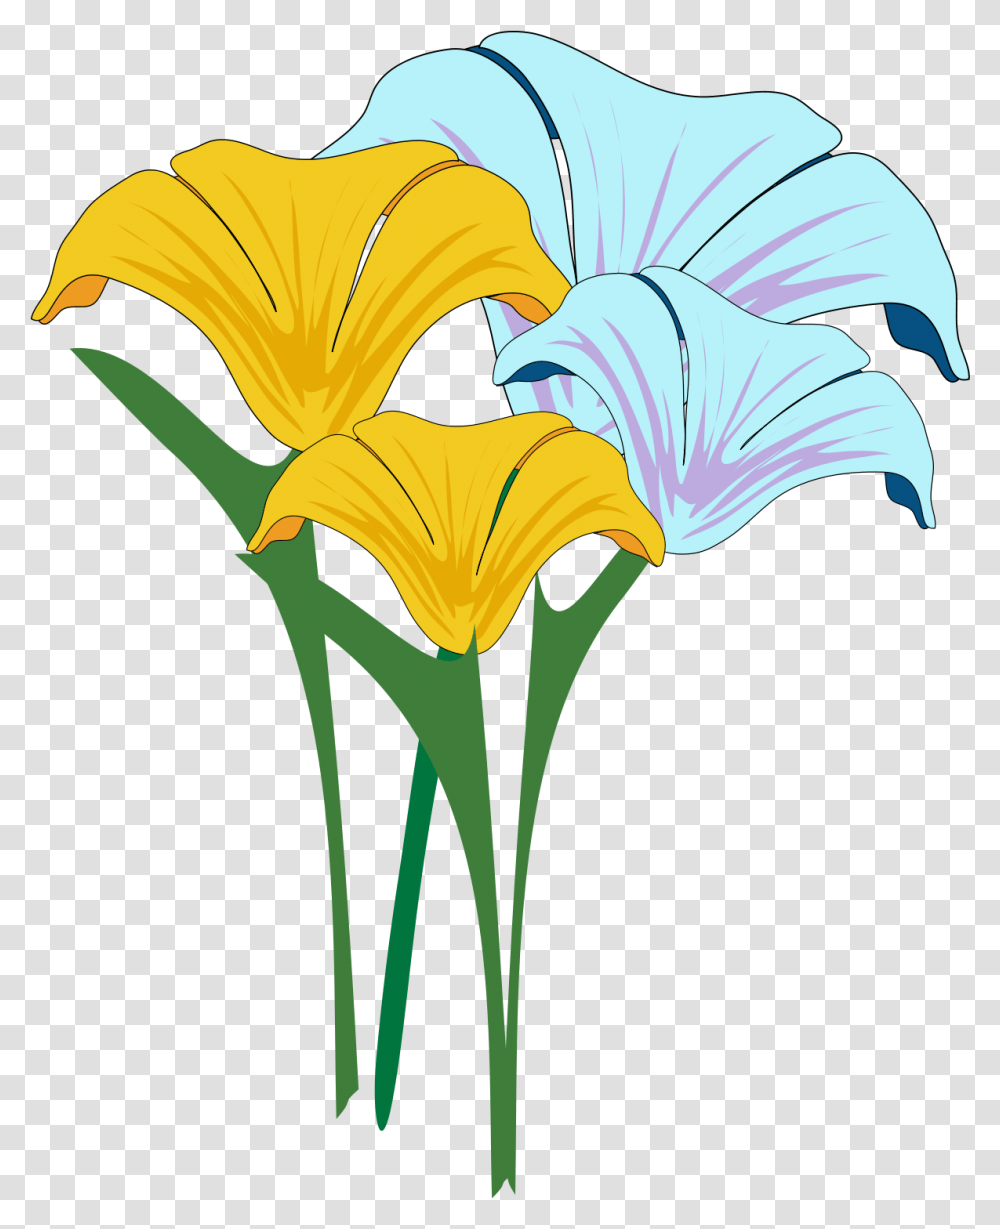 Filebunch Of Flowerssvg Wikimedia Commons Mga Bulaklak Clipart, Iris, Plant, Blossom, Petal Transparent Png